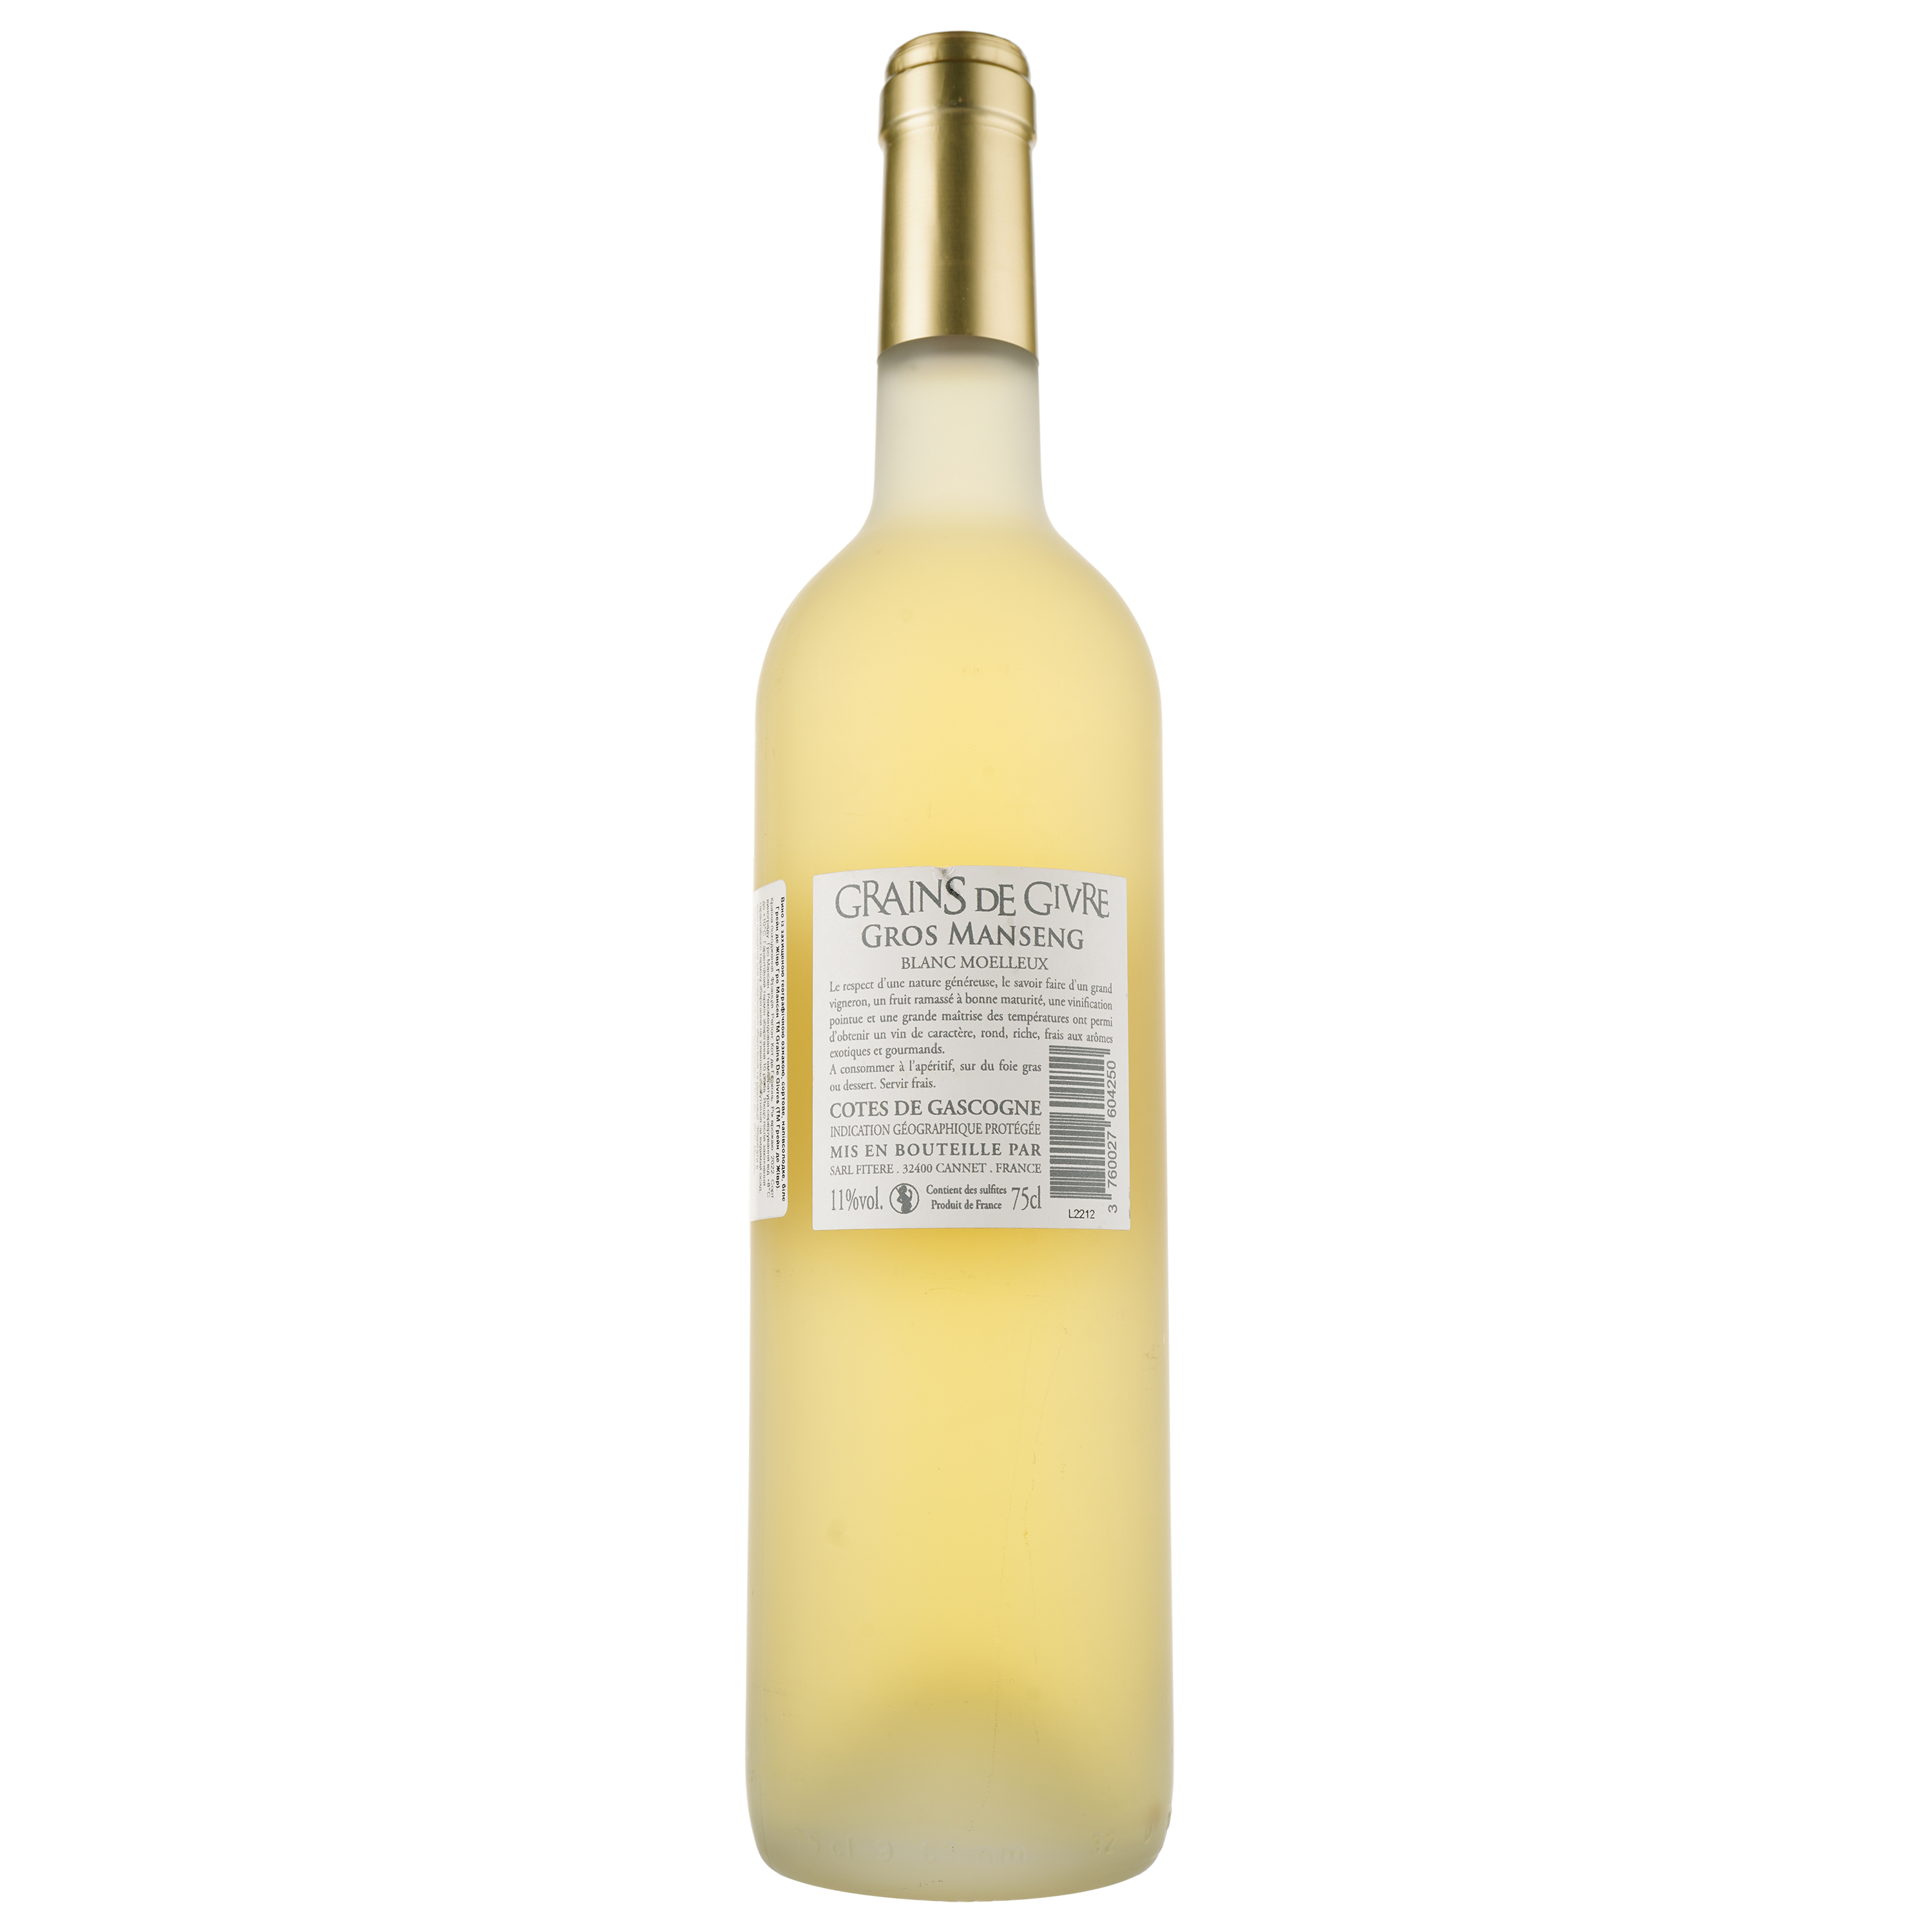 Вино Grains de Givre Gros Manseng 2022 IGP Cotes de Gascogne, белое, полусладкое, 0,75 л - фото 2